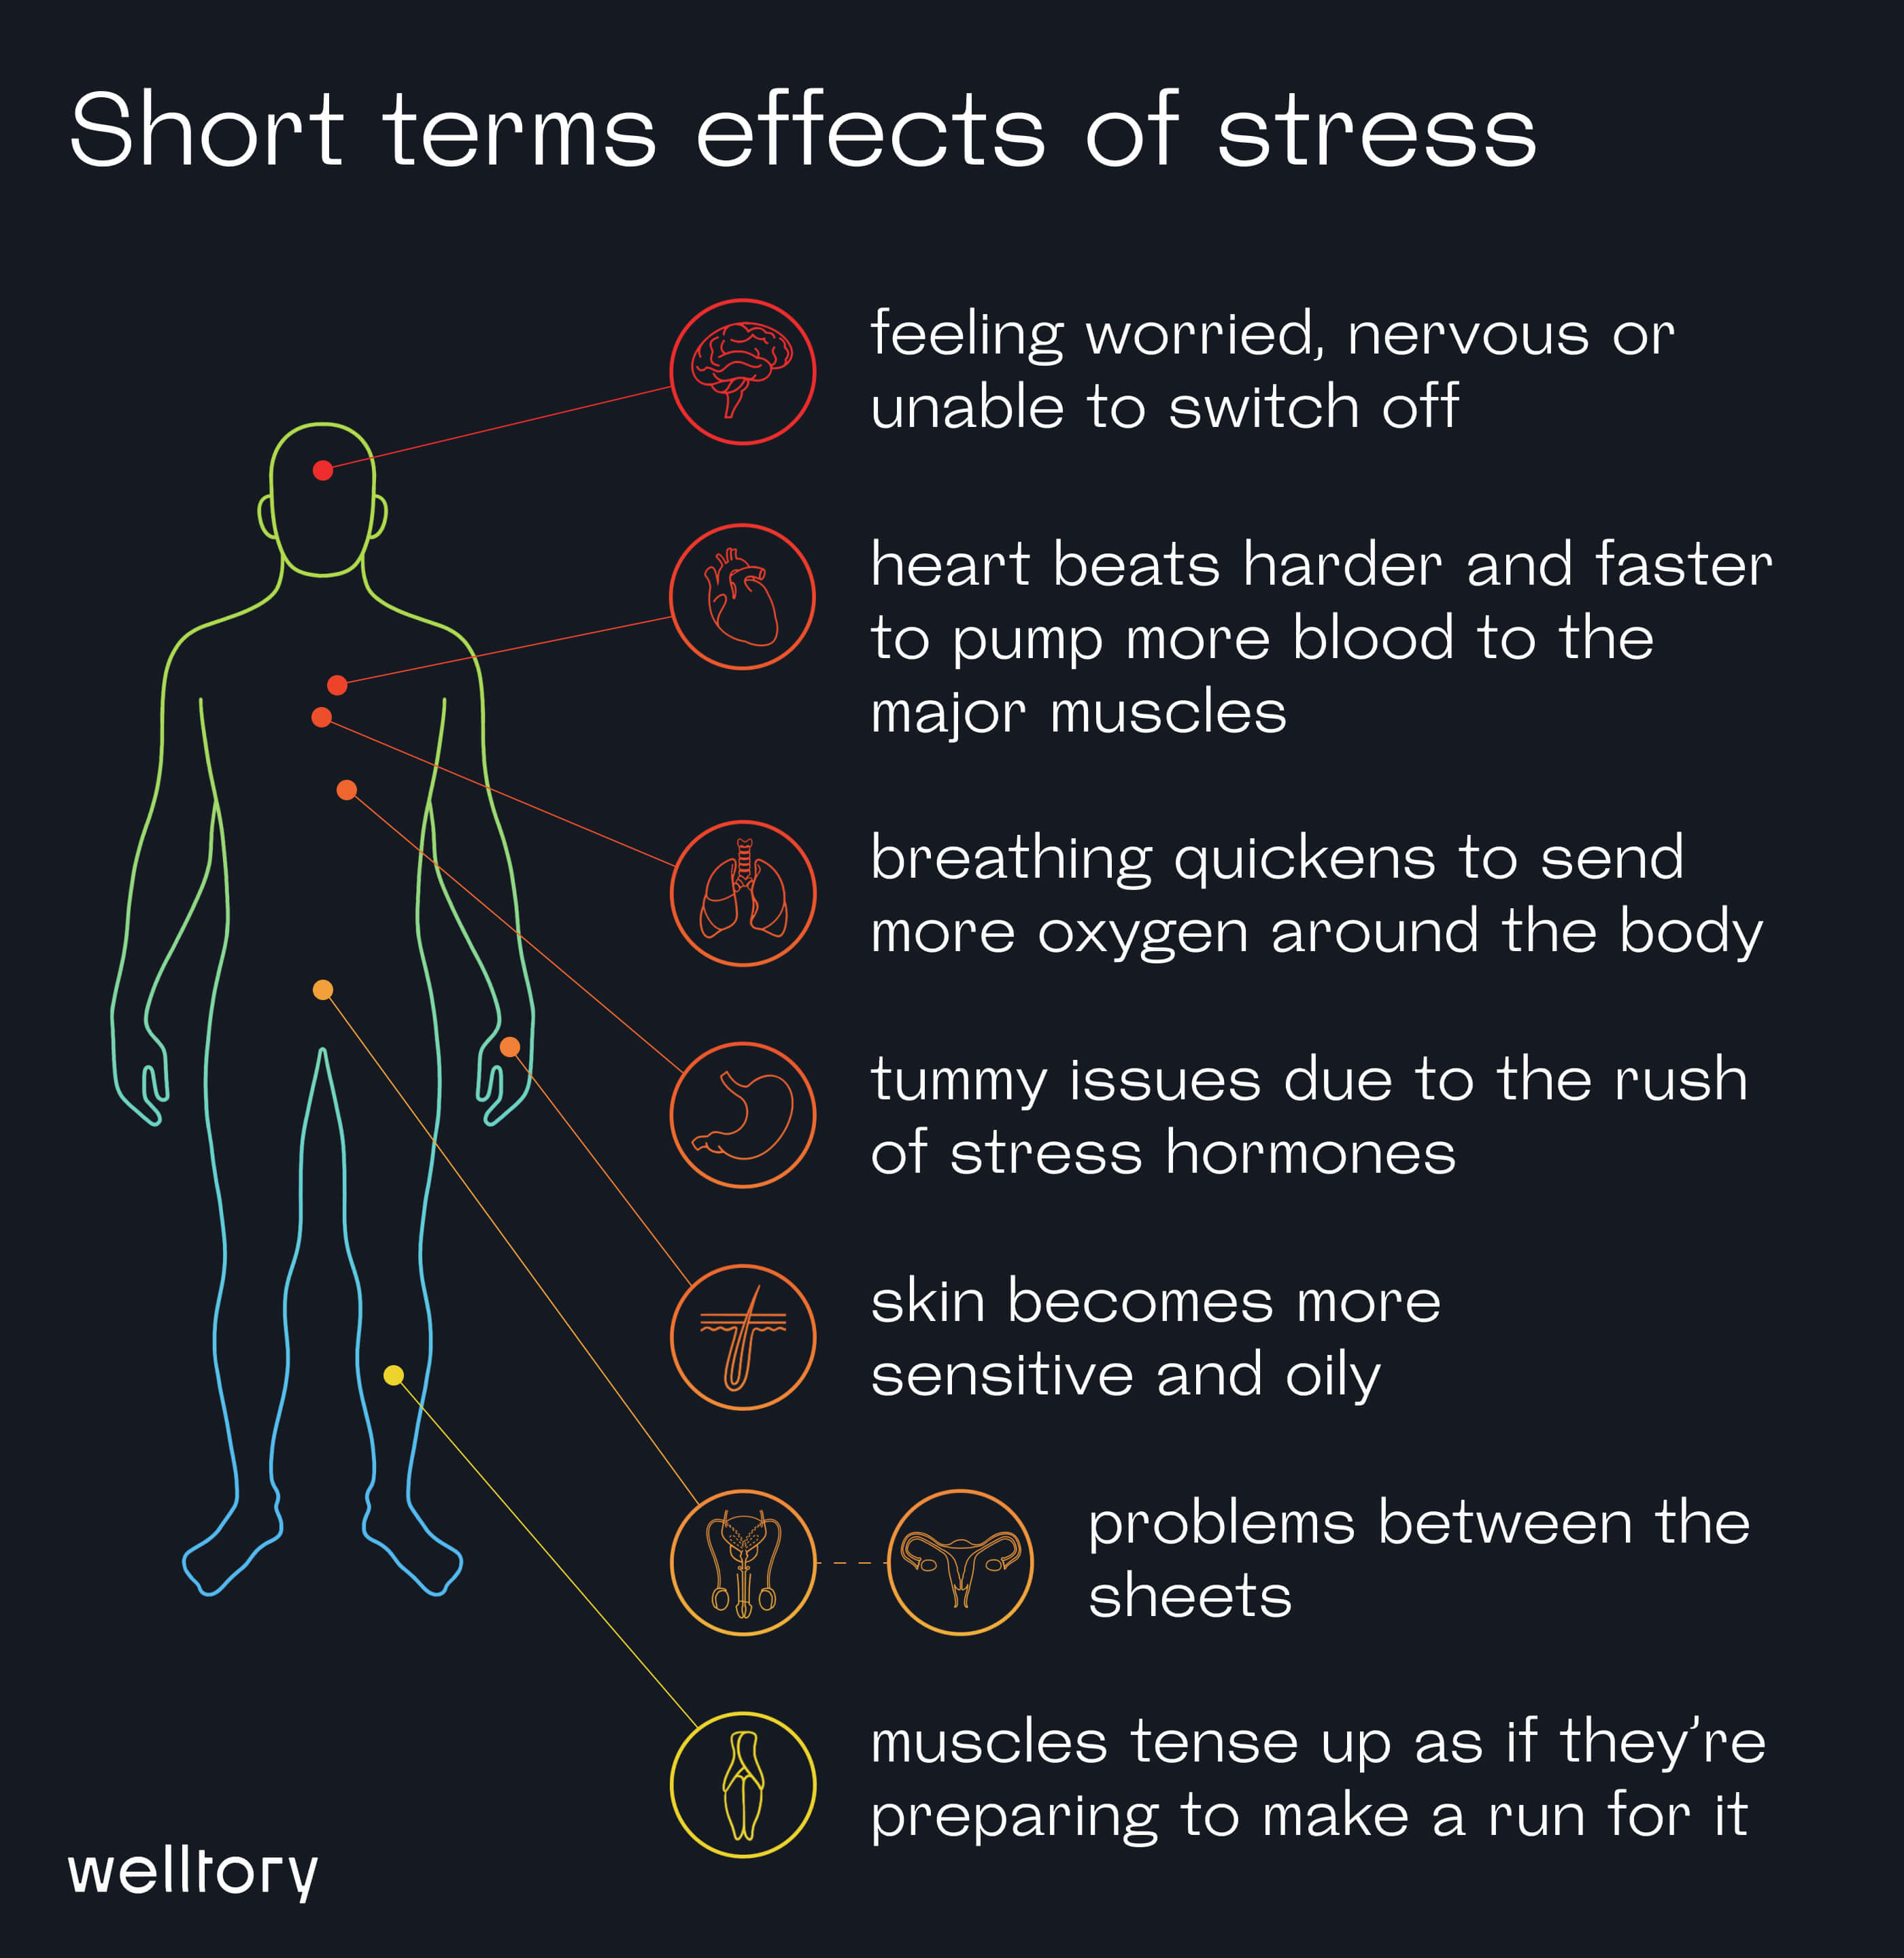 Short term effects of stress